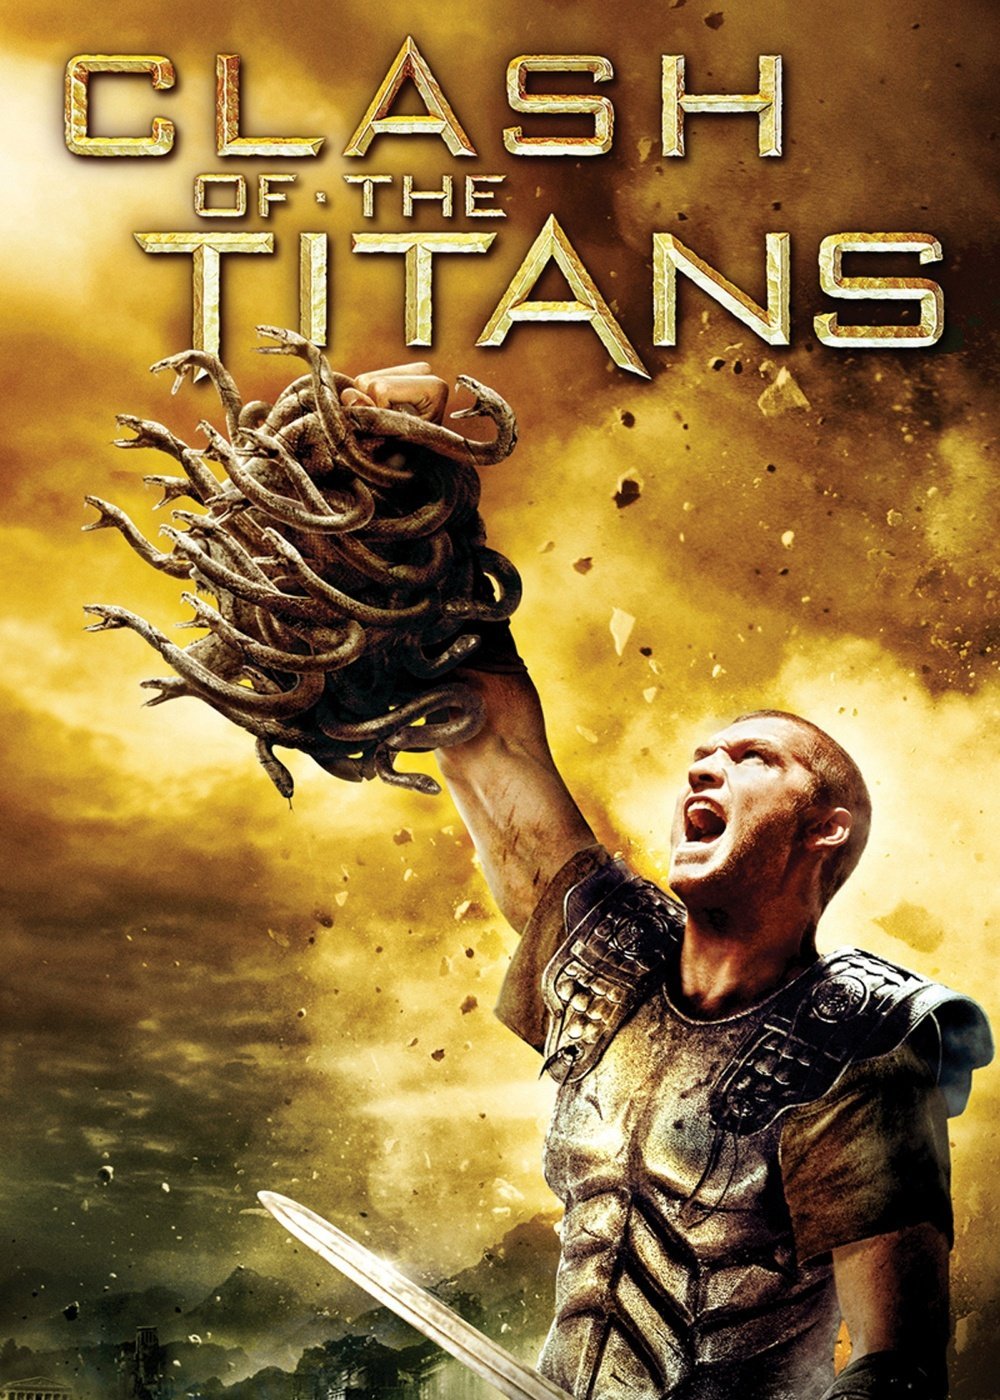 Movie Night with Machine: Clash of the Titans